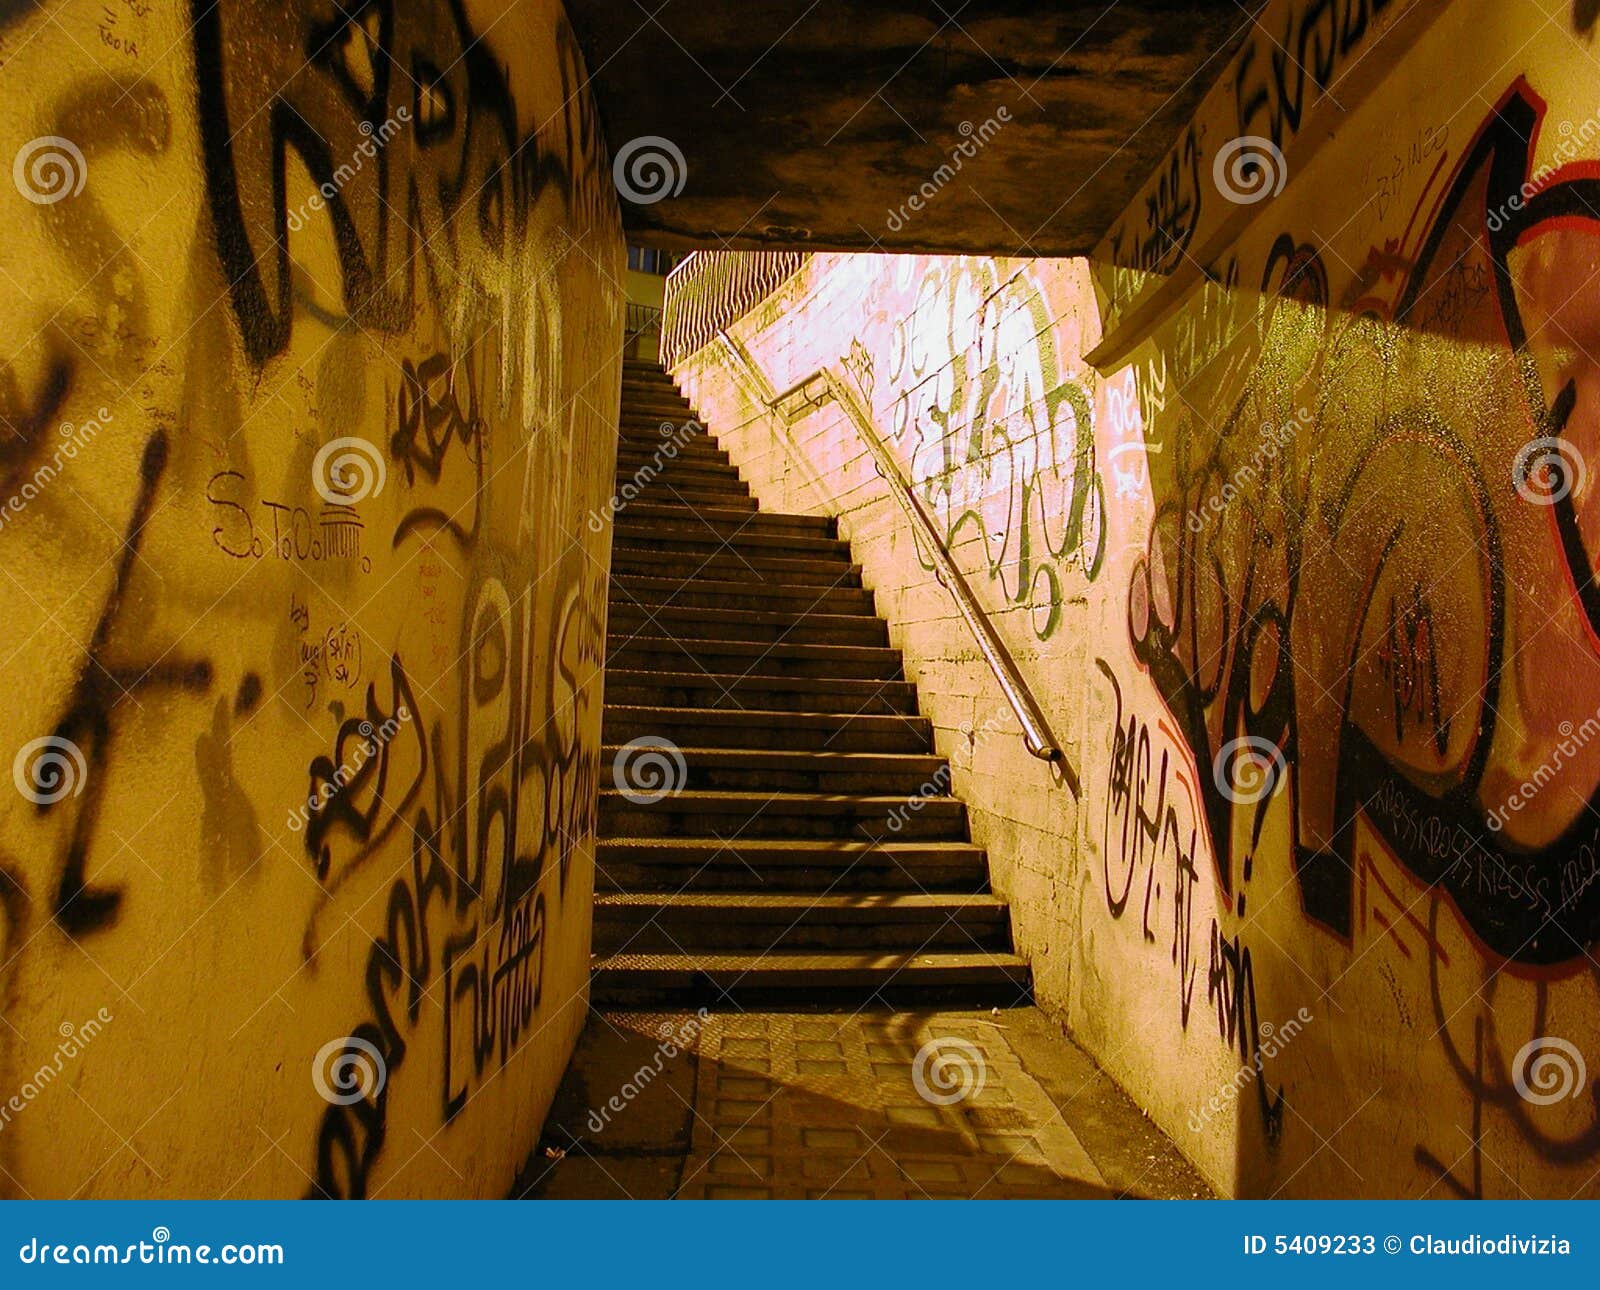 subway underpass